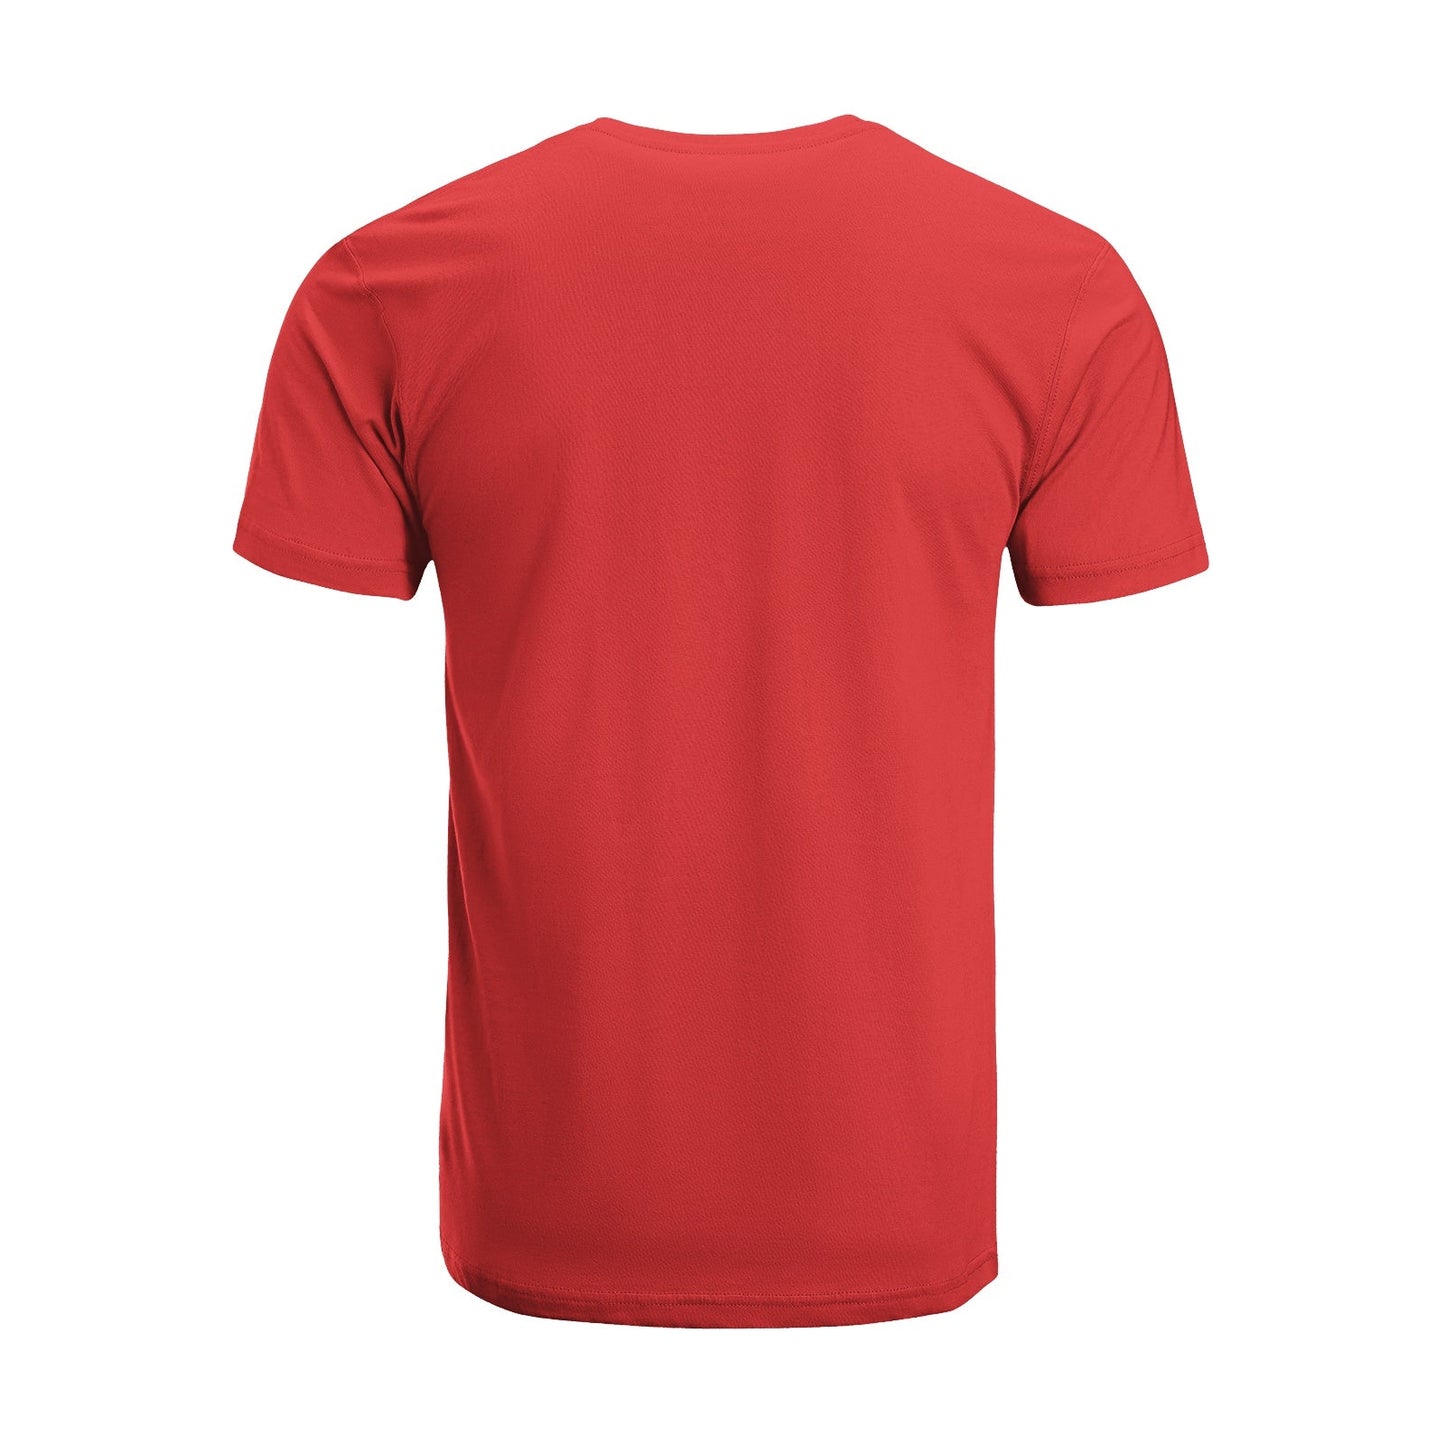 Unisex Short Sleeve Crew Neck Cotton Jersey T-Shirt MOM 04